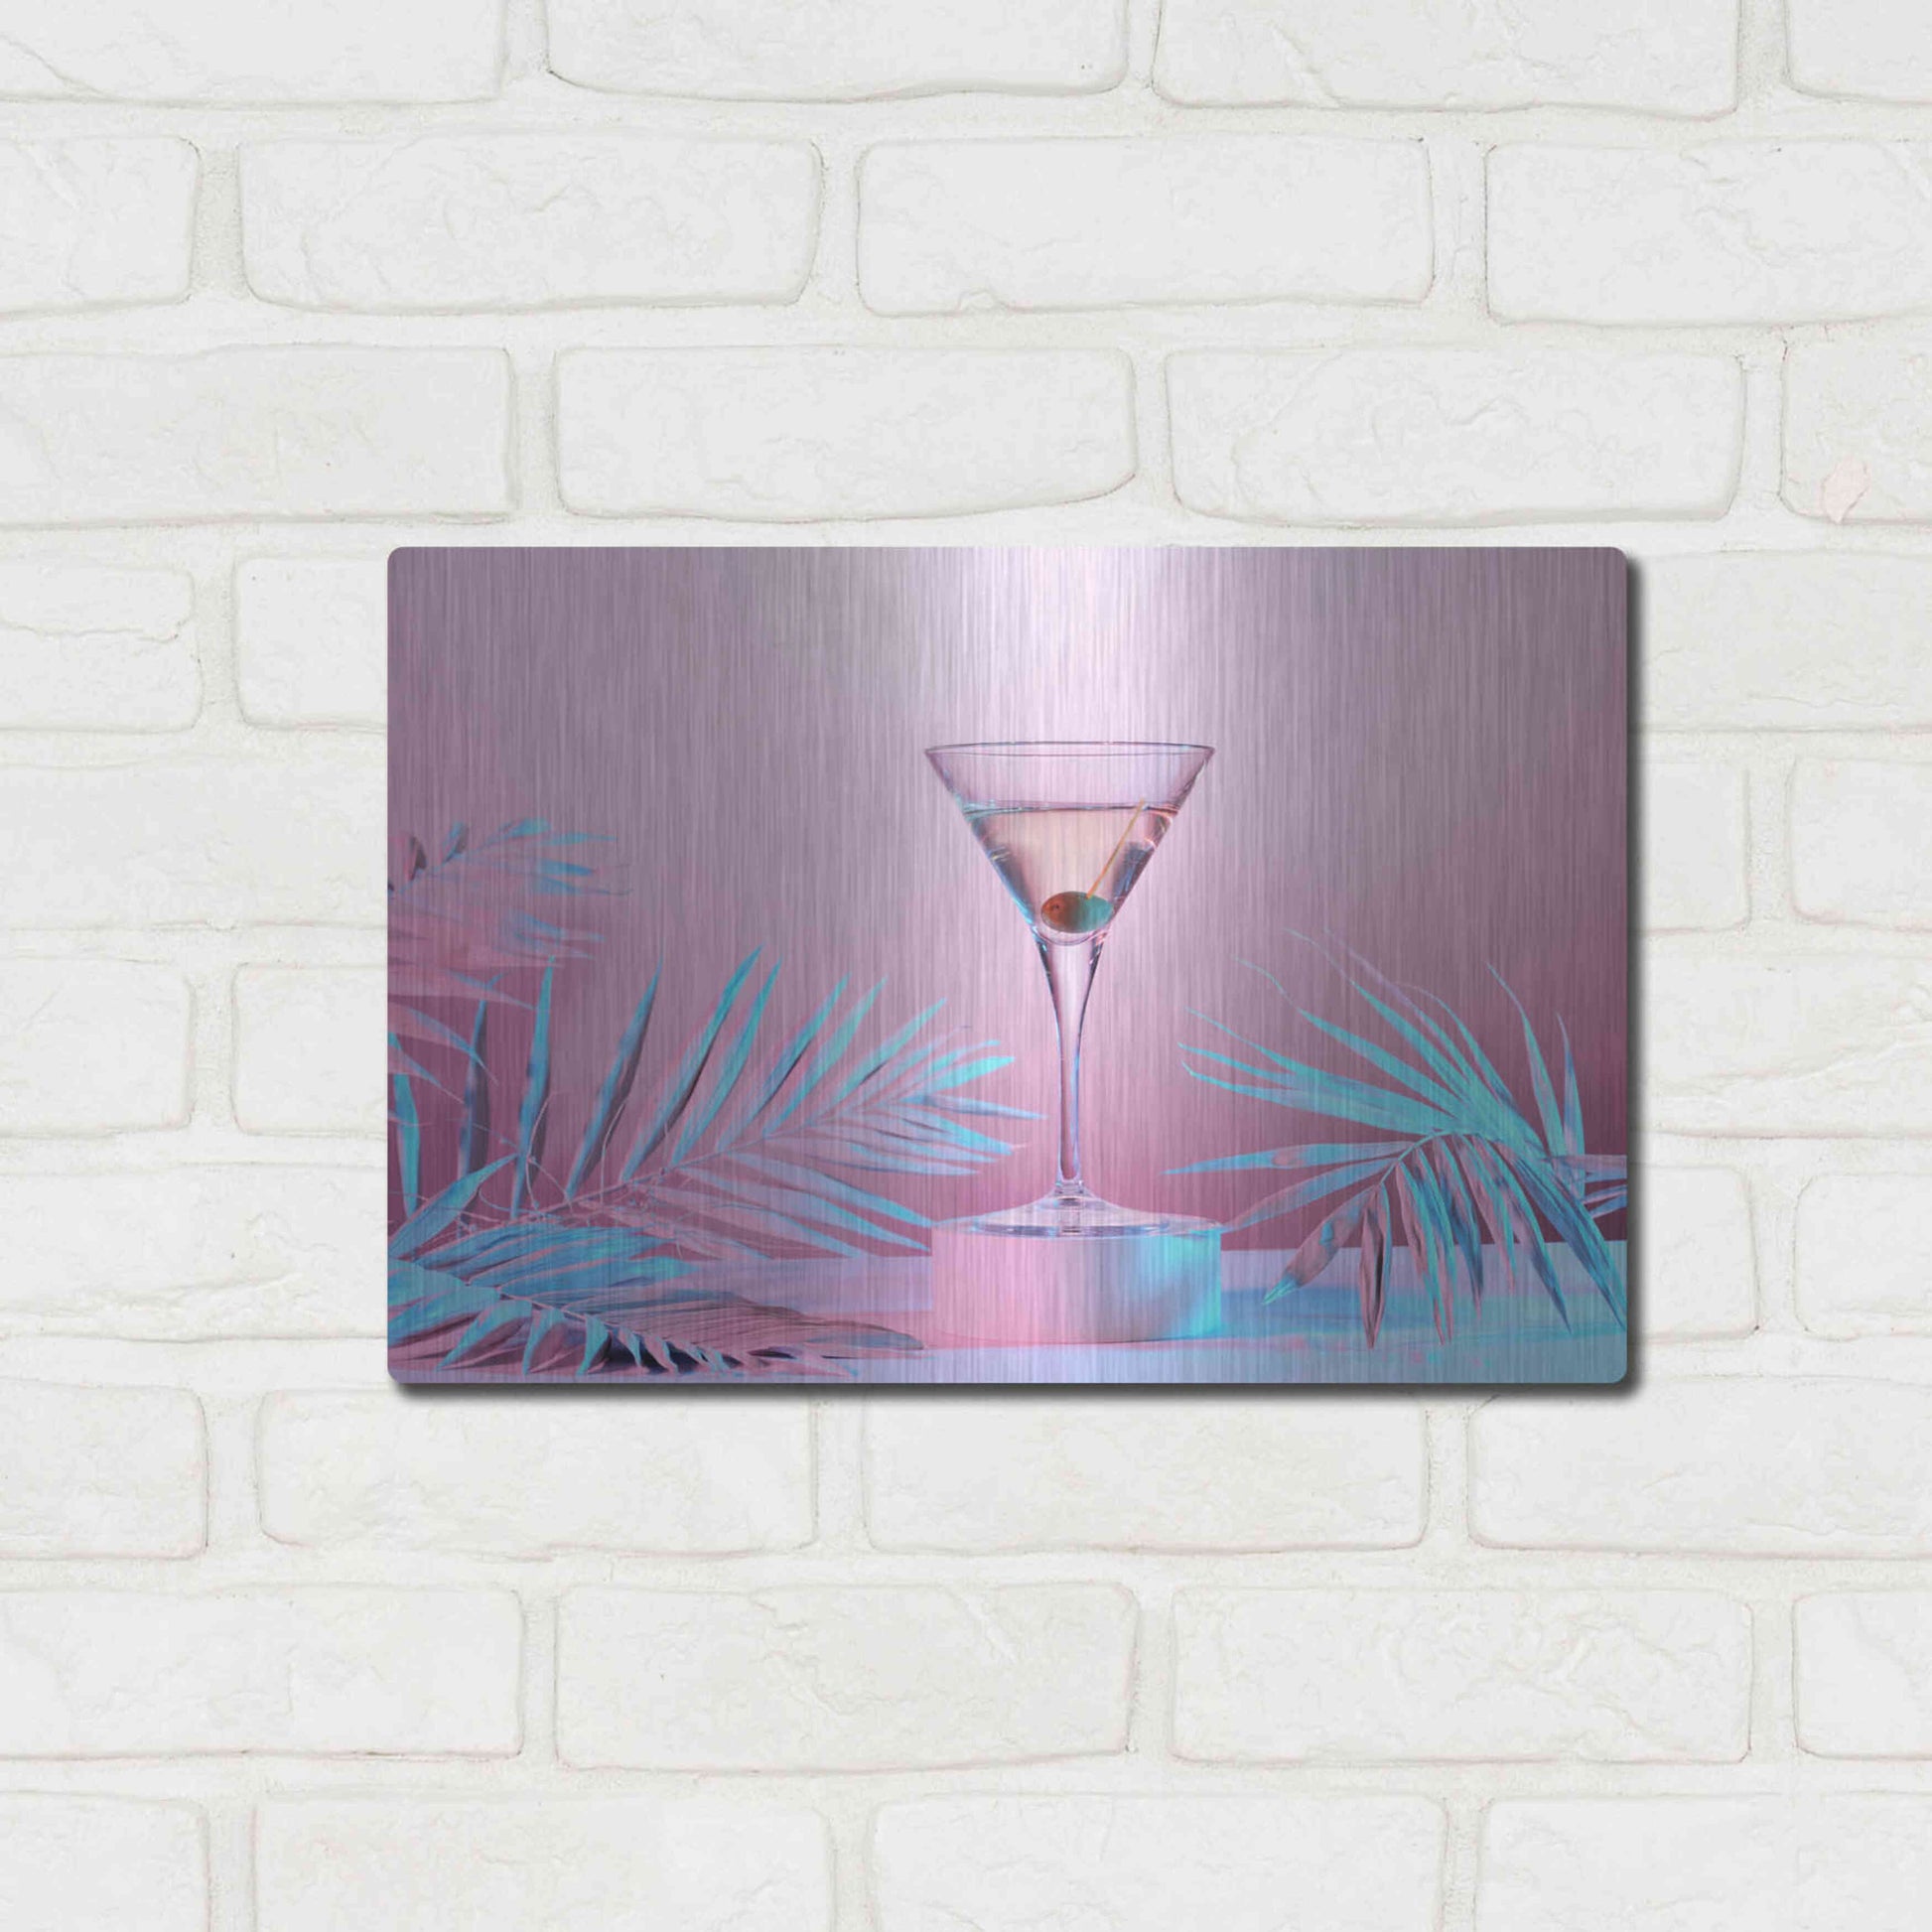 Luxe Metal Art 'Martini' by Epic Portfolio, Metal Wall Art,16x12